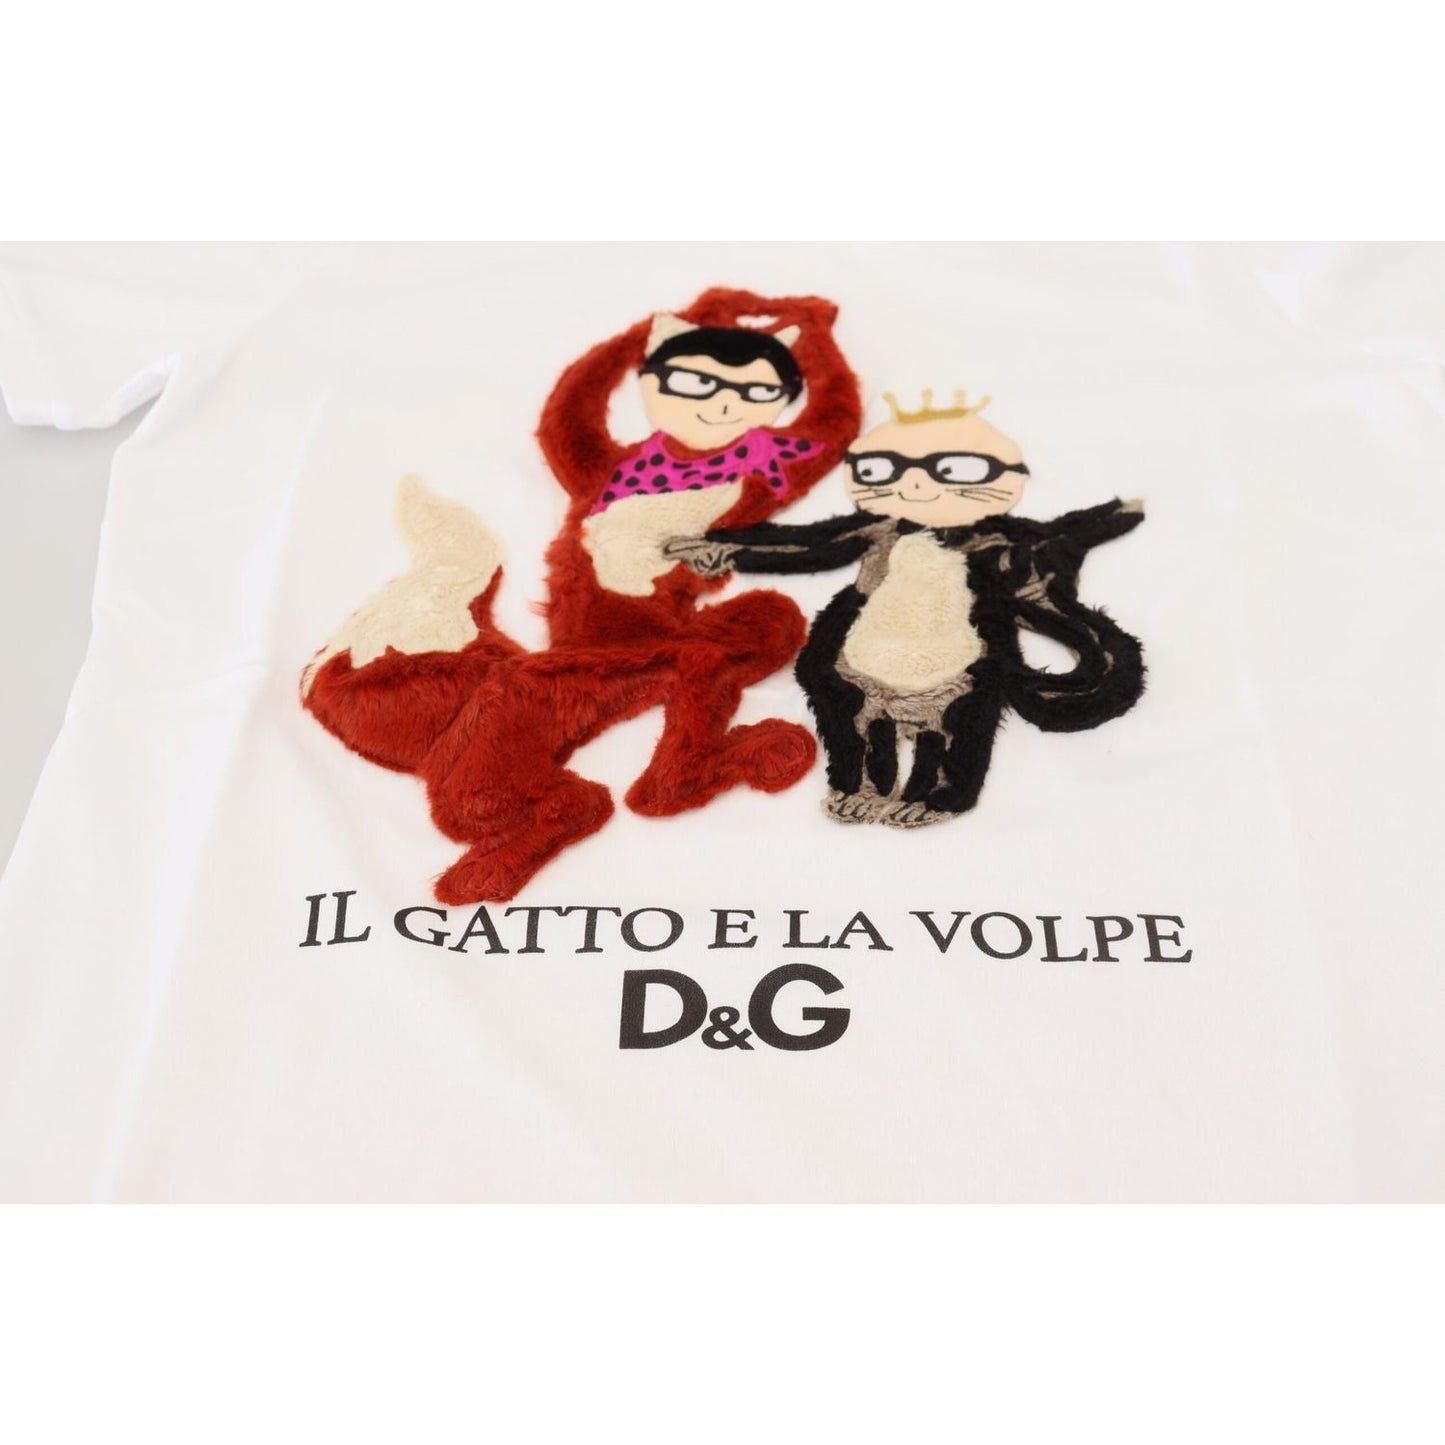 Dolce & Gabbana Iconic Prints Designer Cotton Tee t-shirt-top-white-textured-short-sleeve